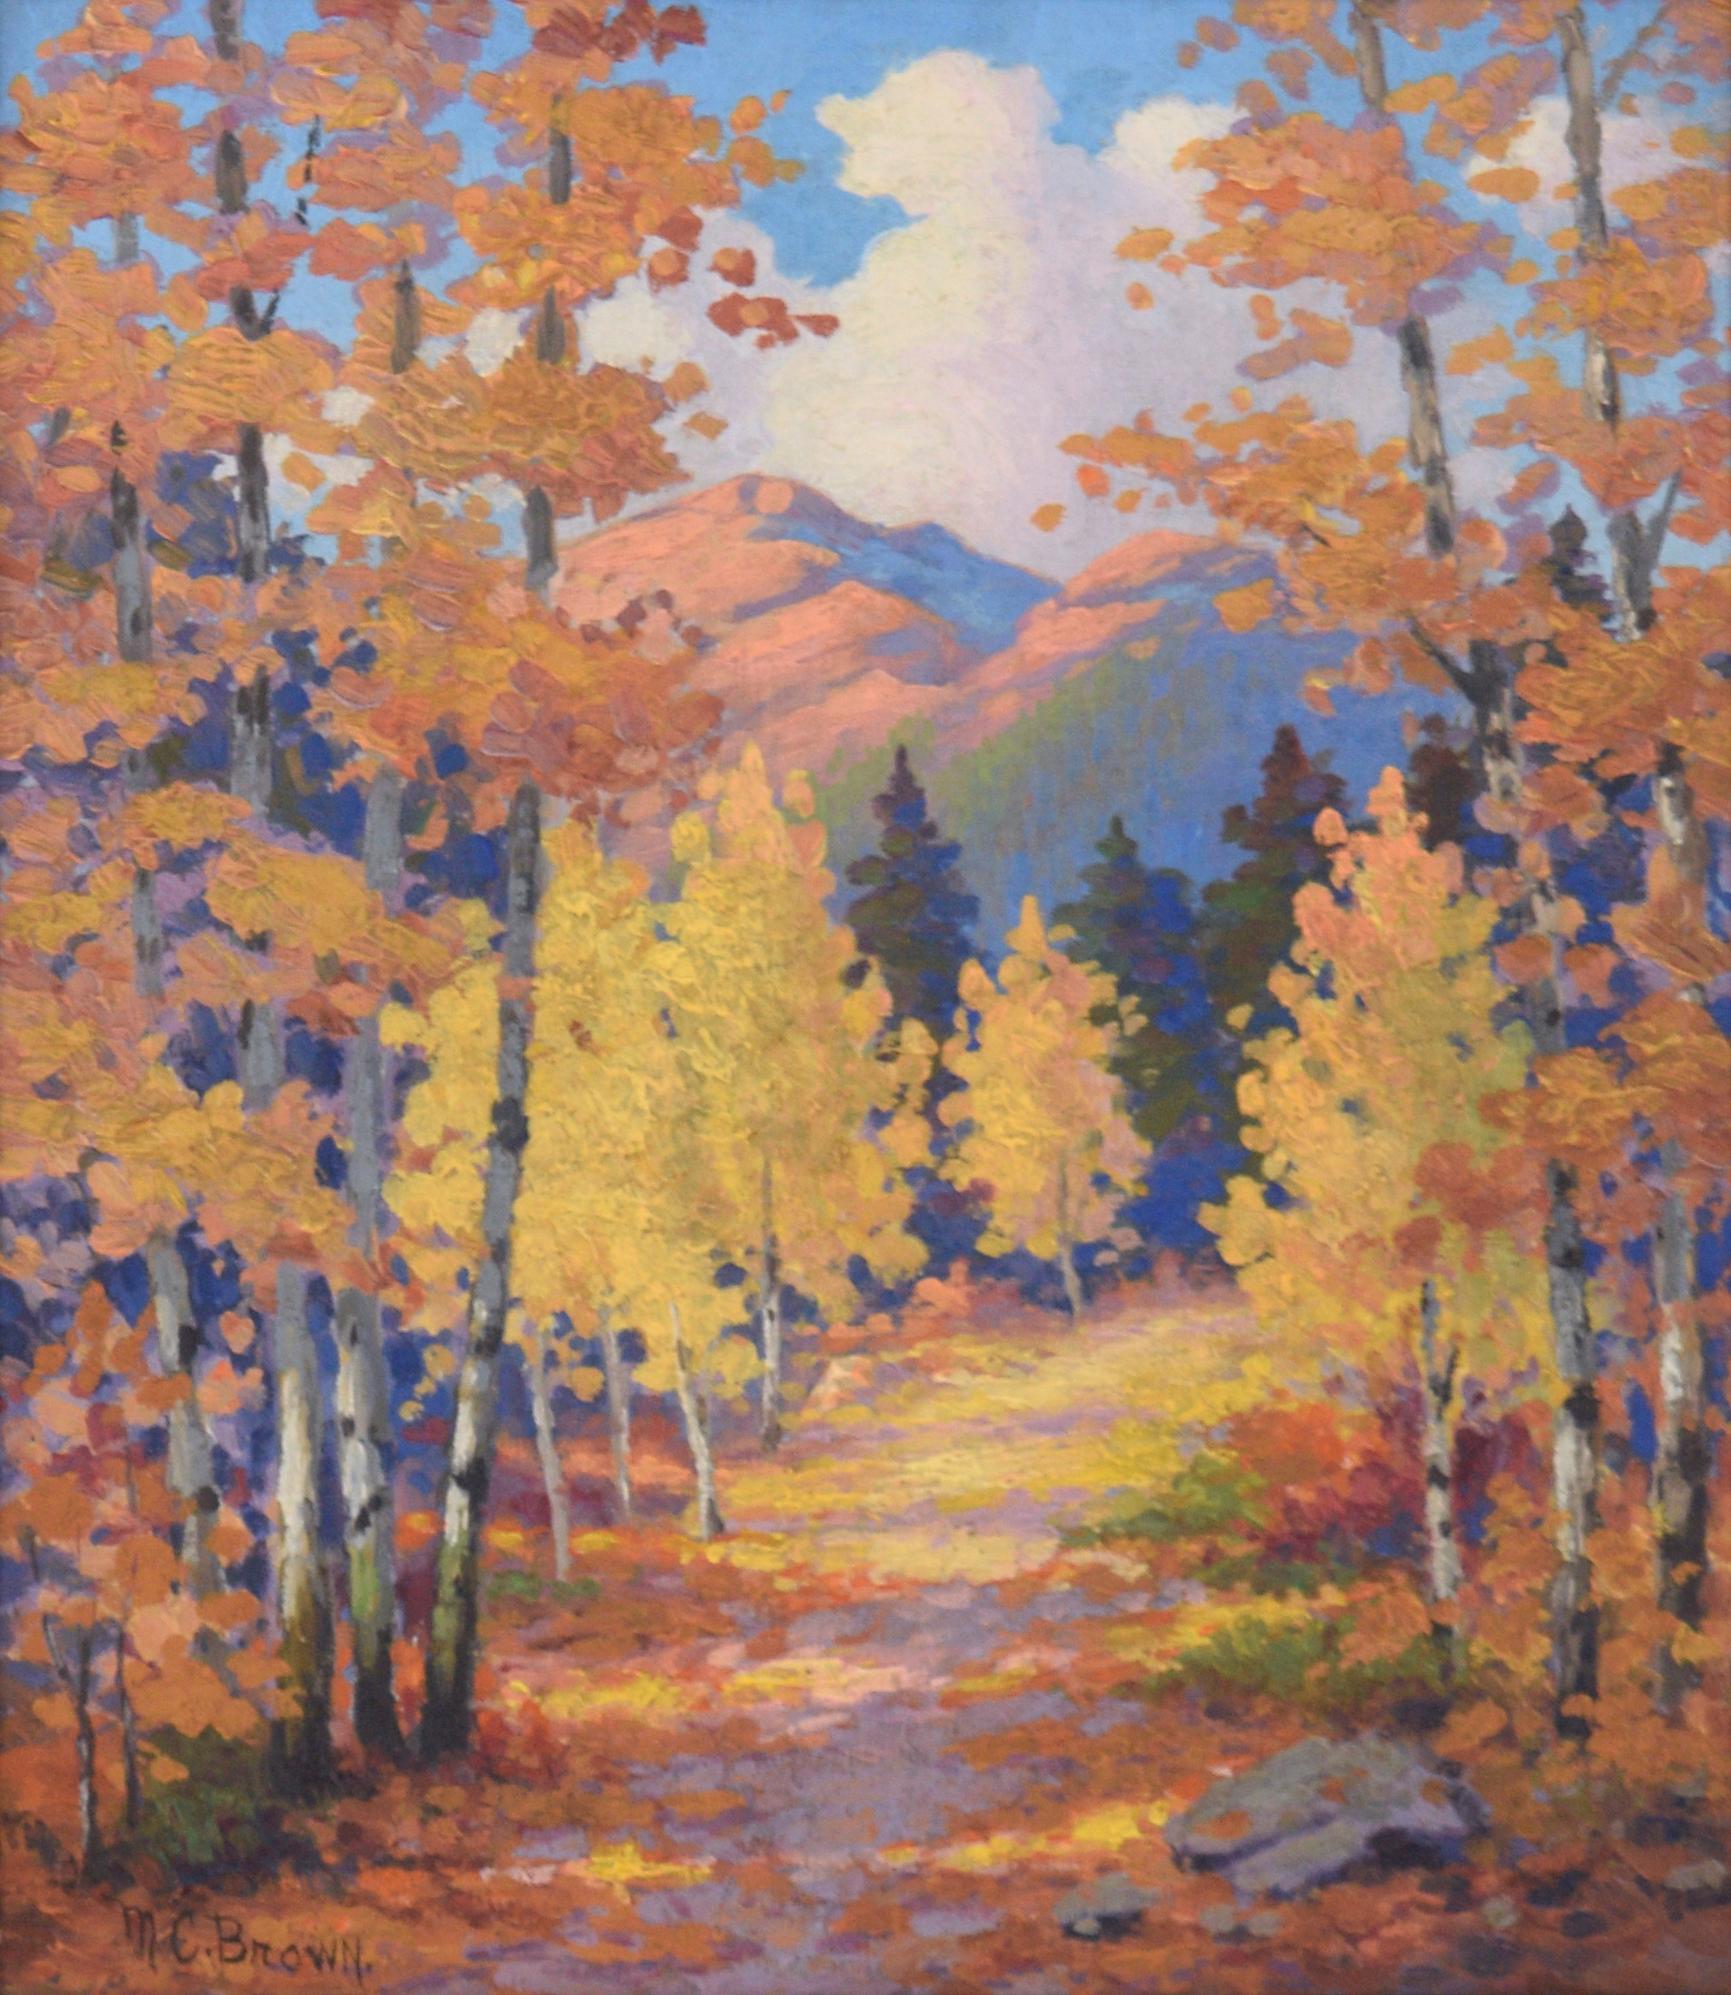 Fallen Leaves on the Path at Estes Park, Colorado - Autumn Landscape 1940 - Painting by MC Brown